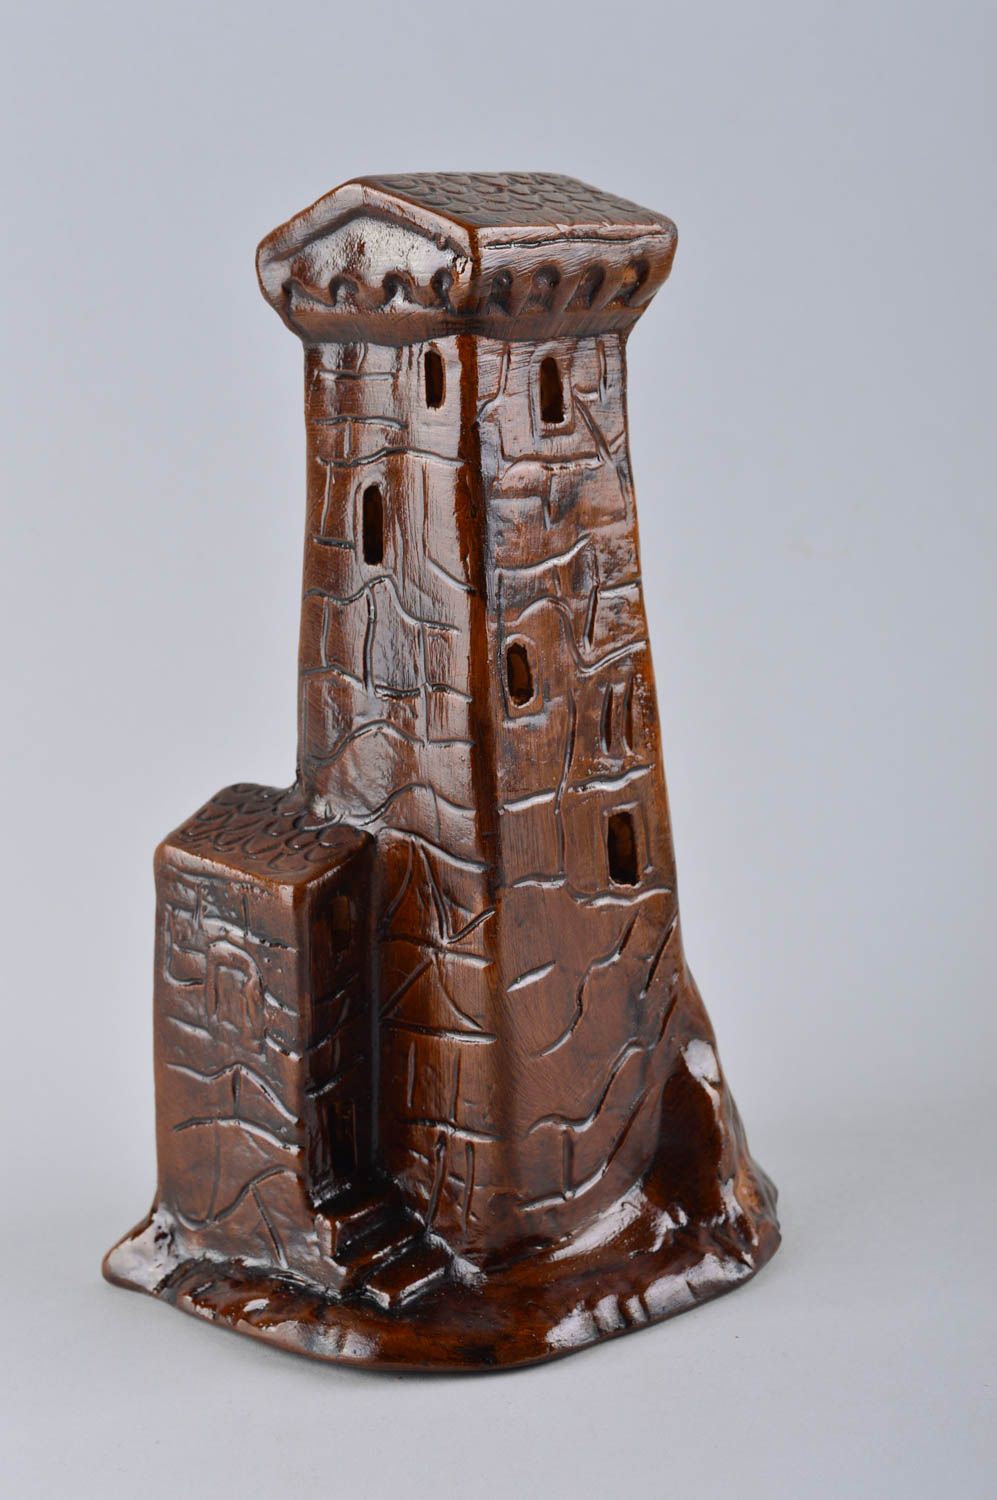 Handmade Keramik Deko Figur aus Ton Wohnzimmer Deko Swanischer Turm Geschenk foto 2